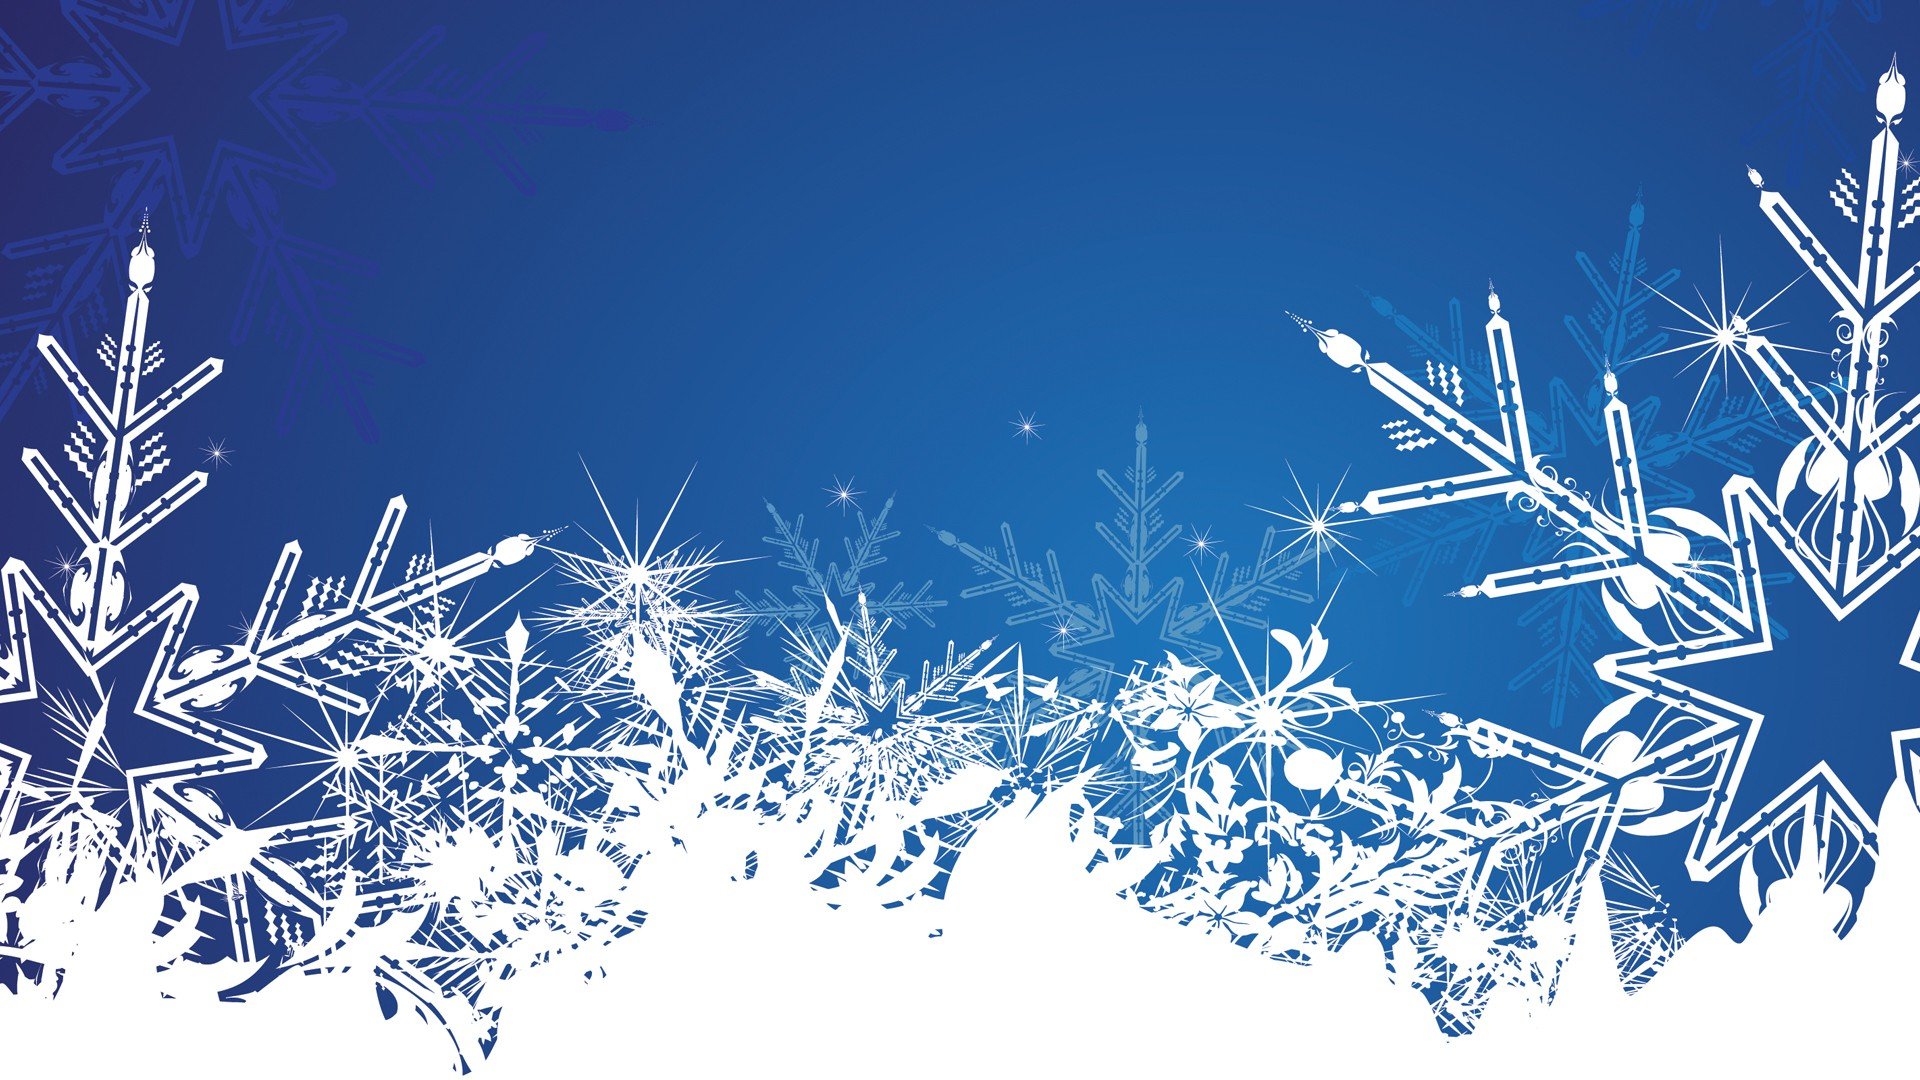 Winter Vectors Illustrations Snowflakes Blue Background Vector Art